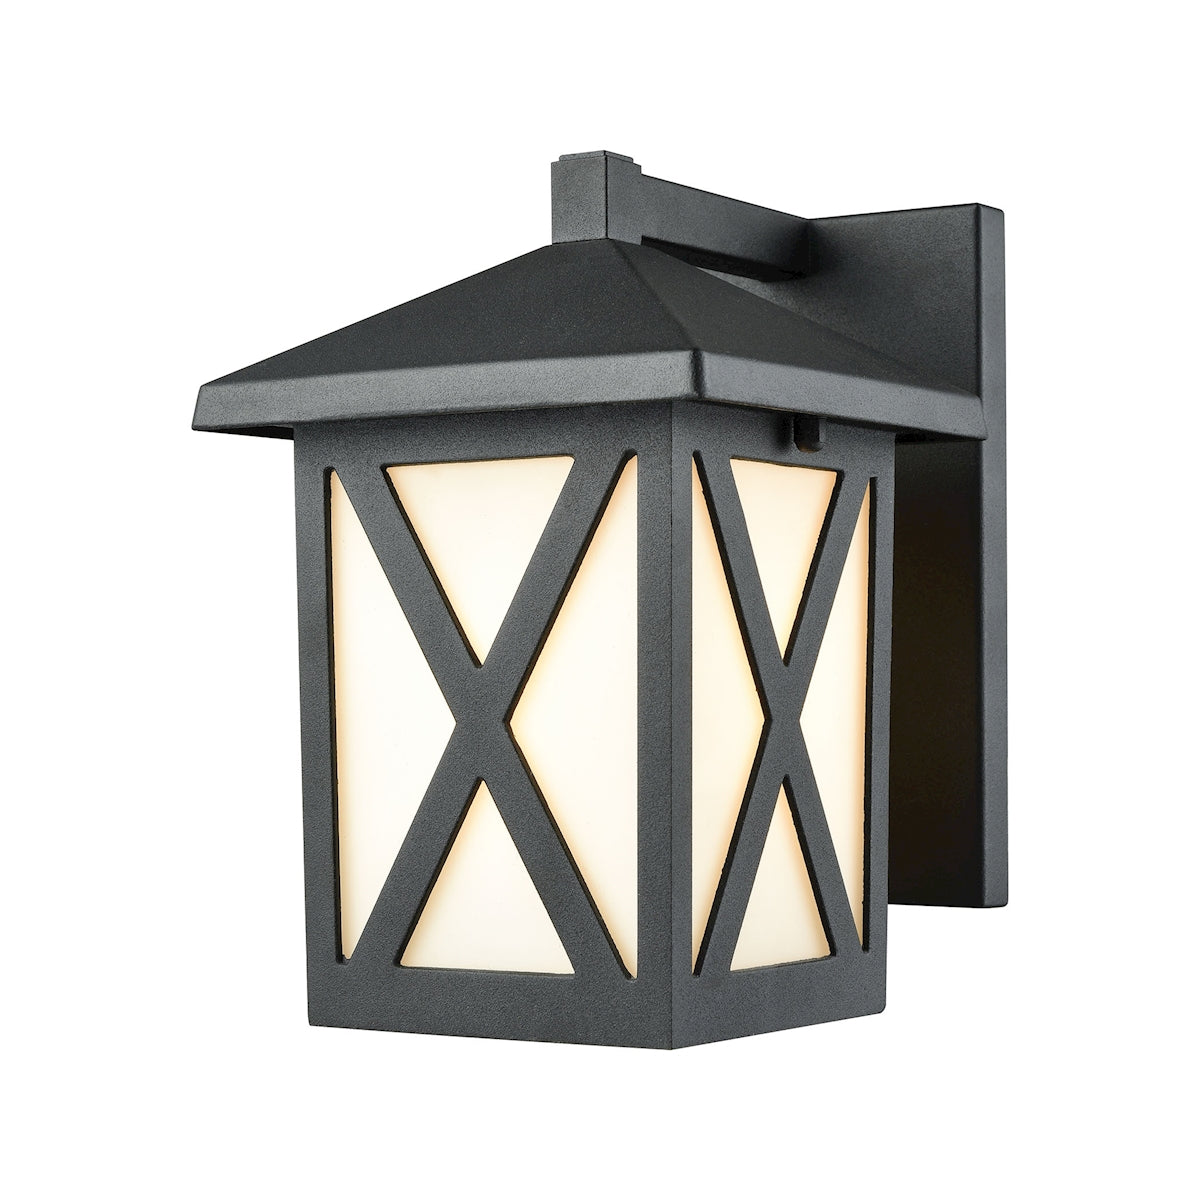 ELK Lighting 45215/1 Lawton 1-Light Outdoor Wall Lamp in Matte Black